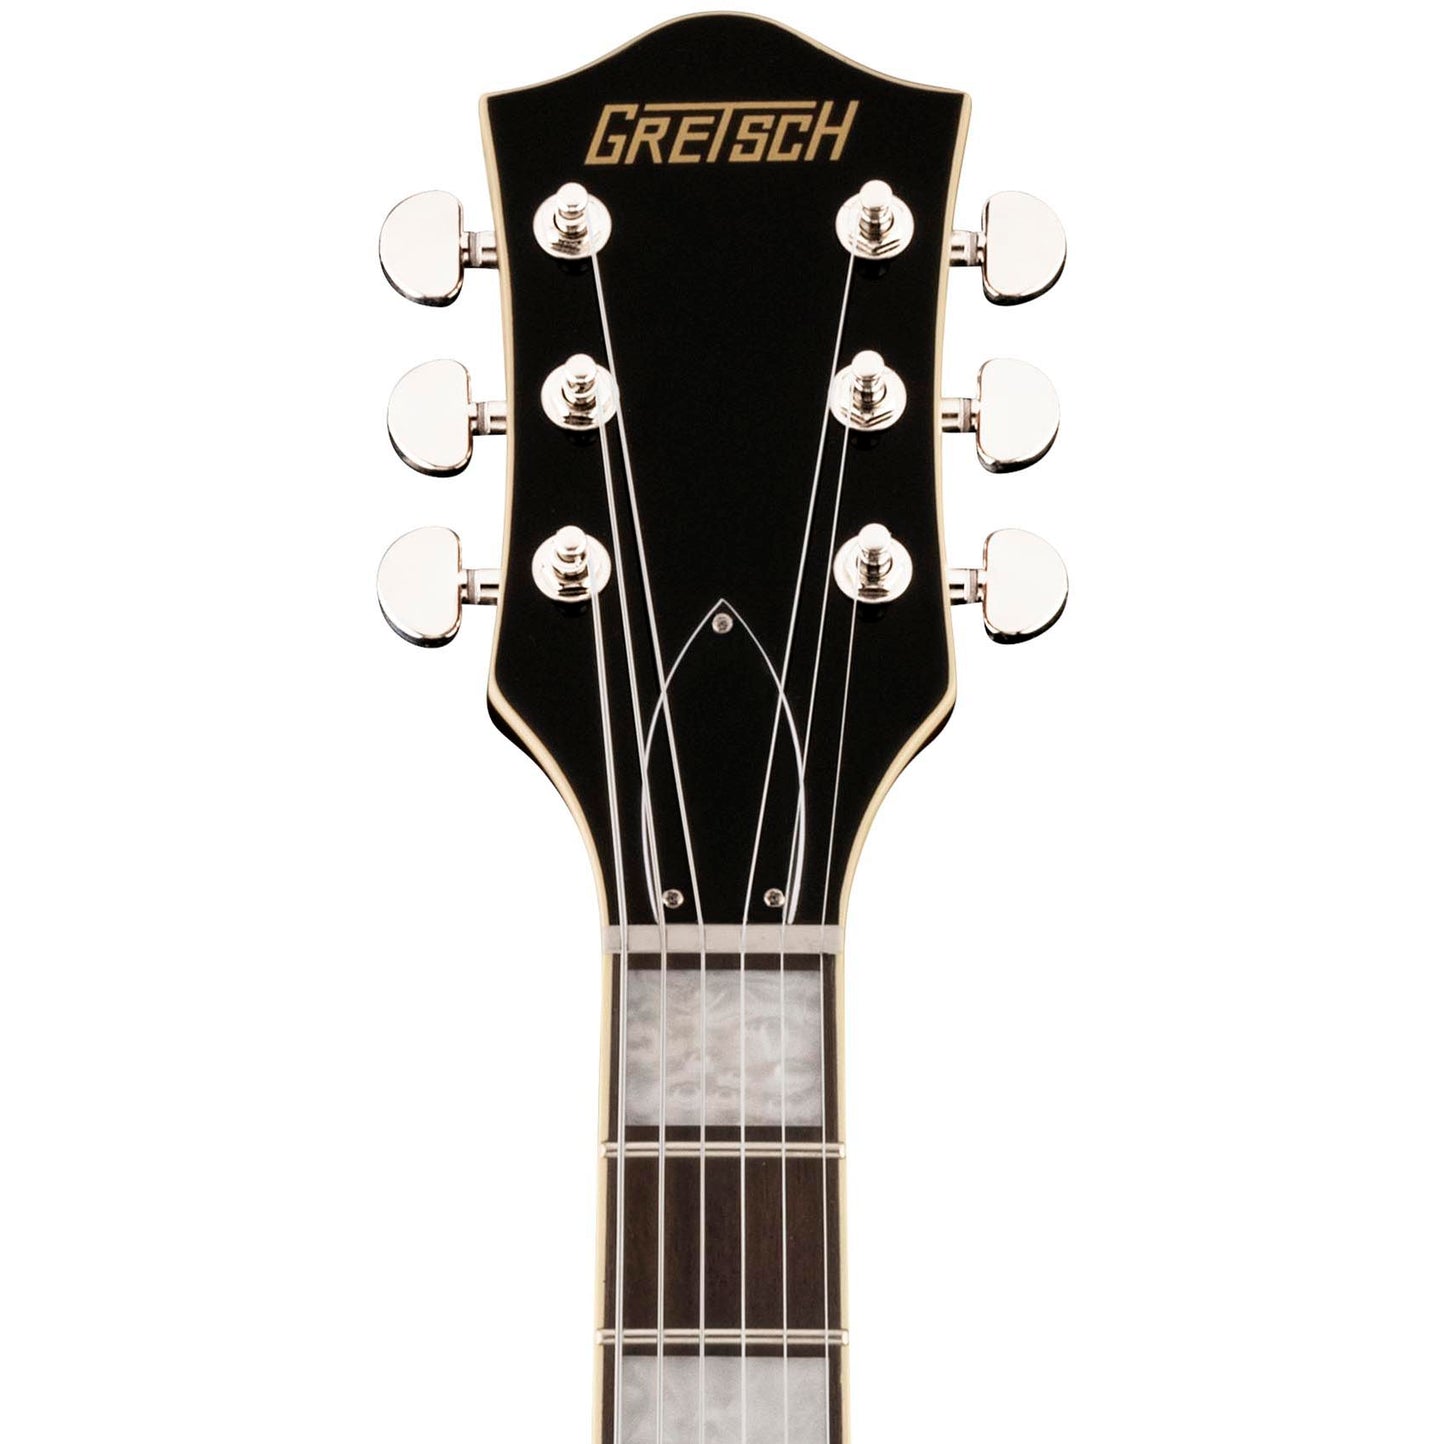 Gretsch G2622 Streamliner™ Center Block Semi Hollow Electric Guitar, Forge Glow Maple